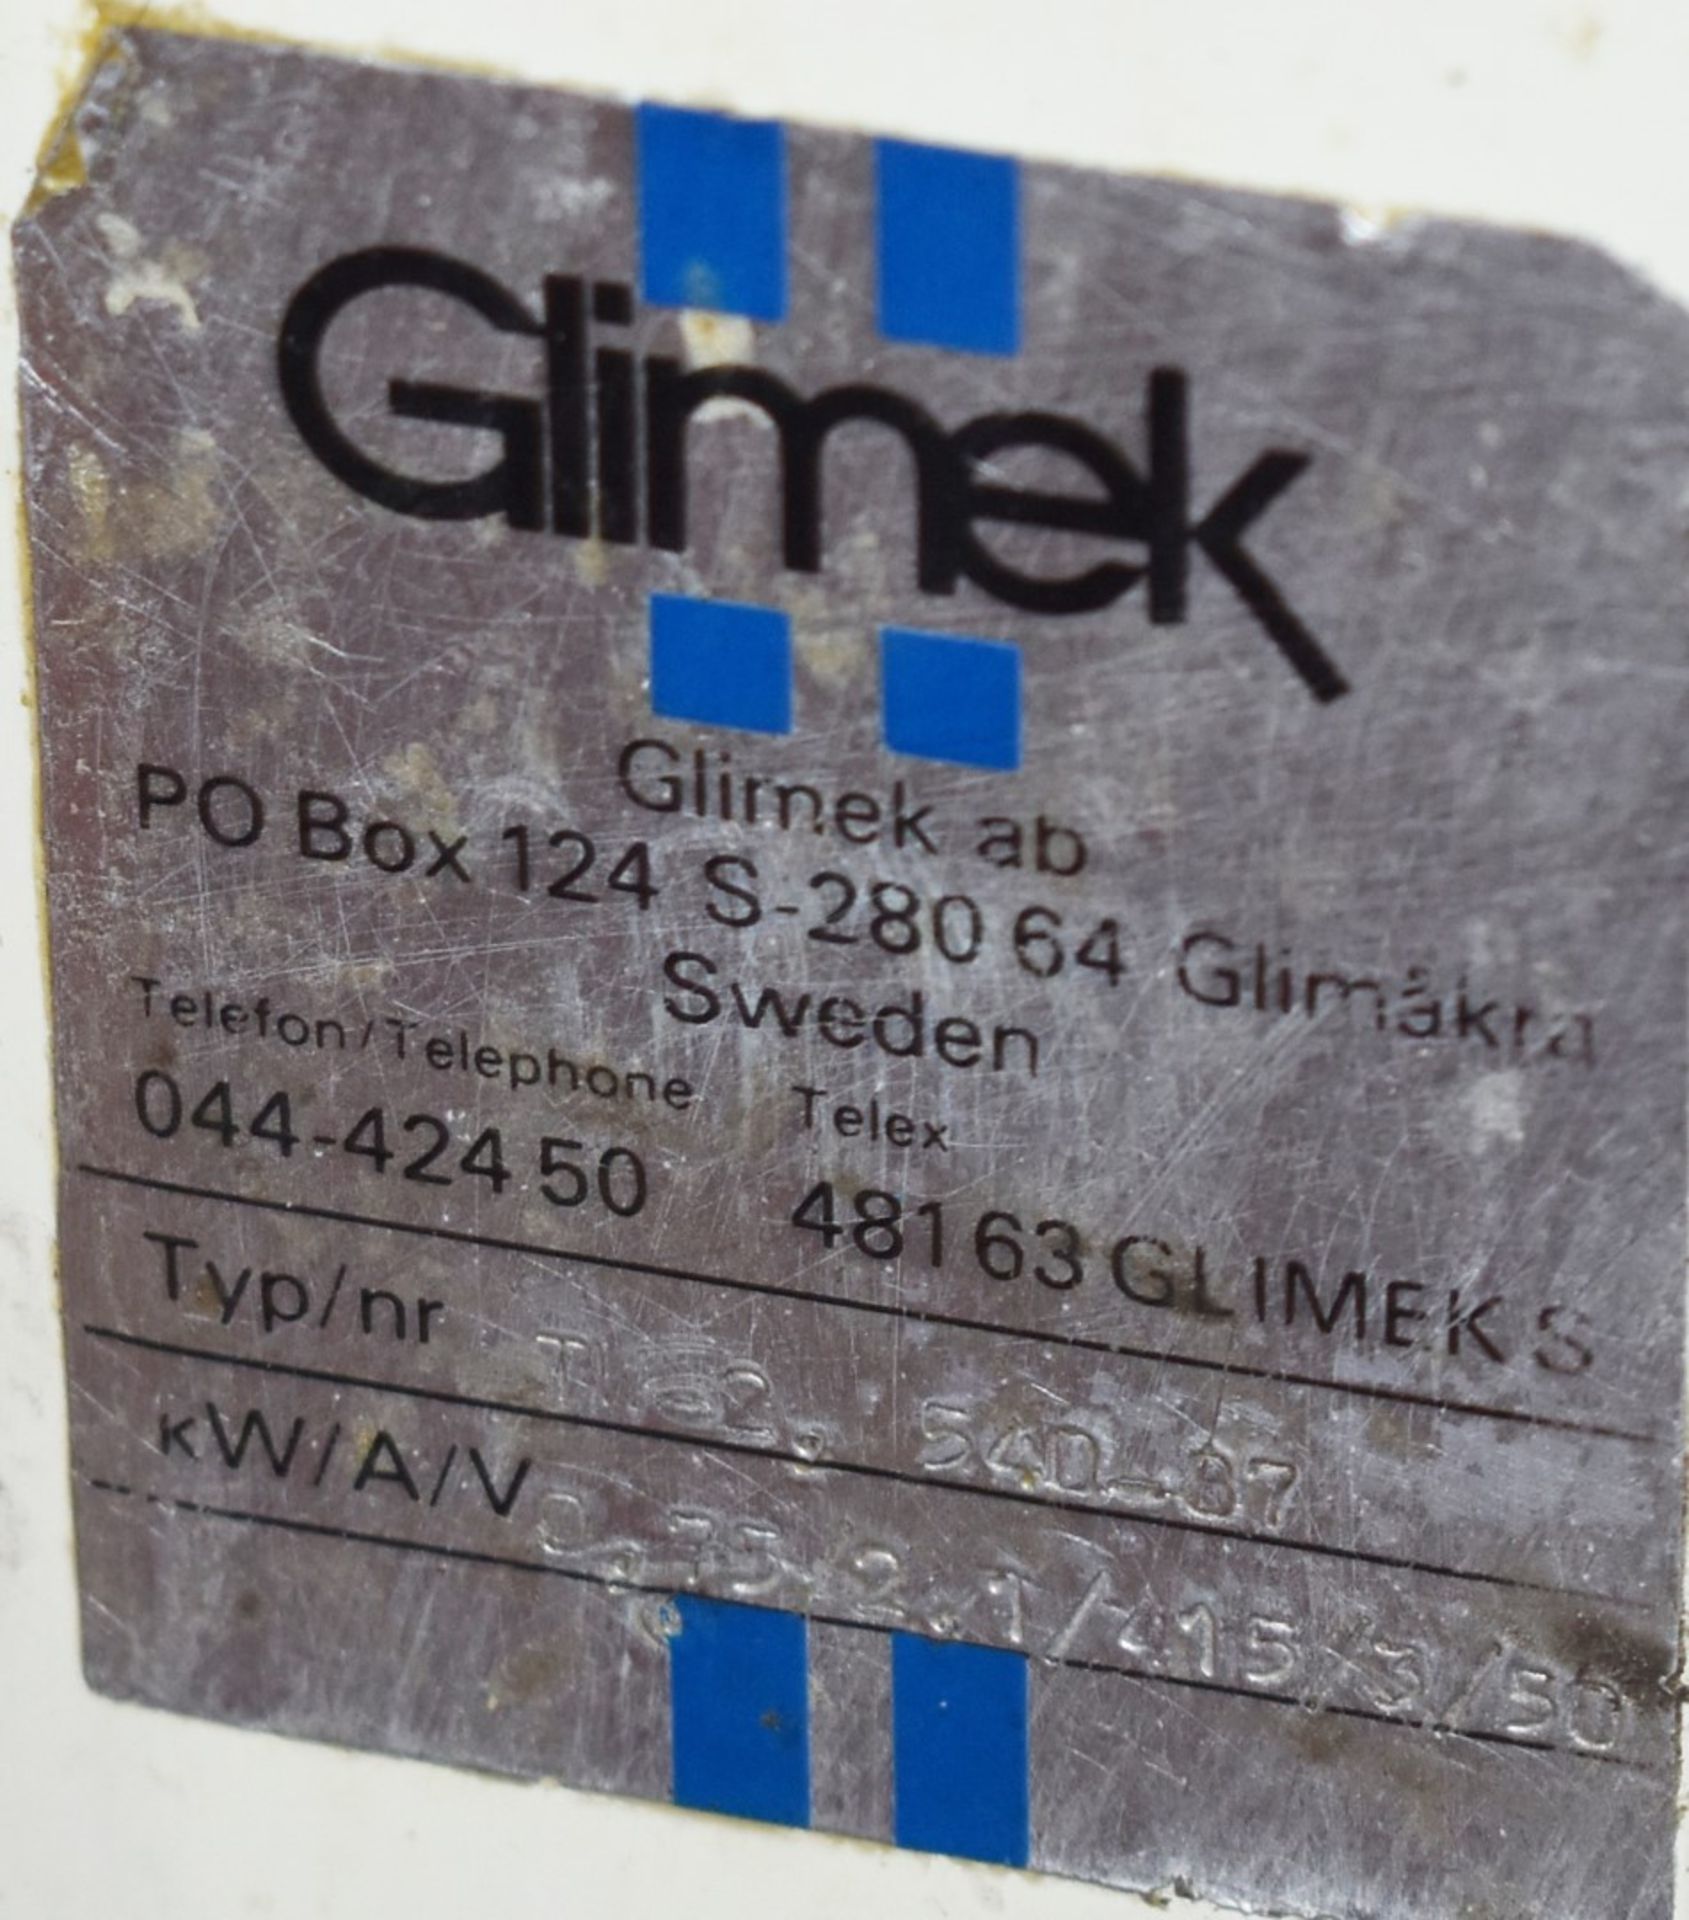 1 x Glimek Commercial Bun Divider Moulder - Bakery Equipment - Ref CB108 - CL290 - 3 Phase Power - - Image 5 of 8